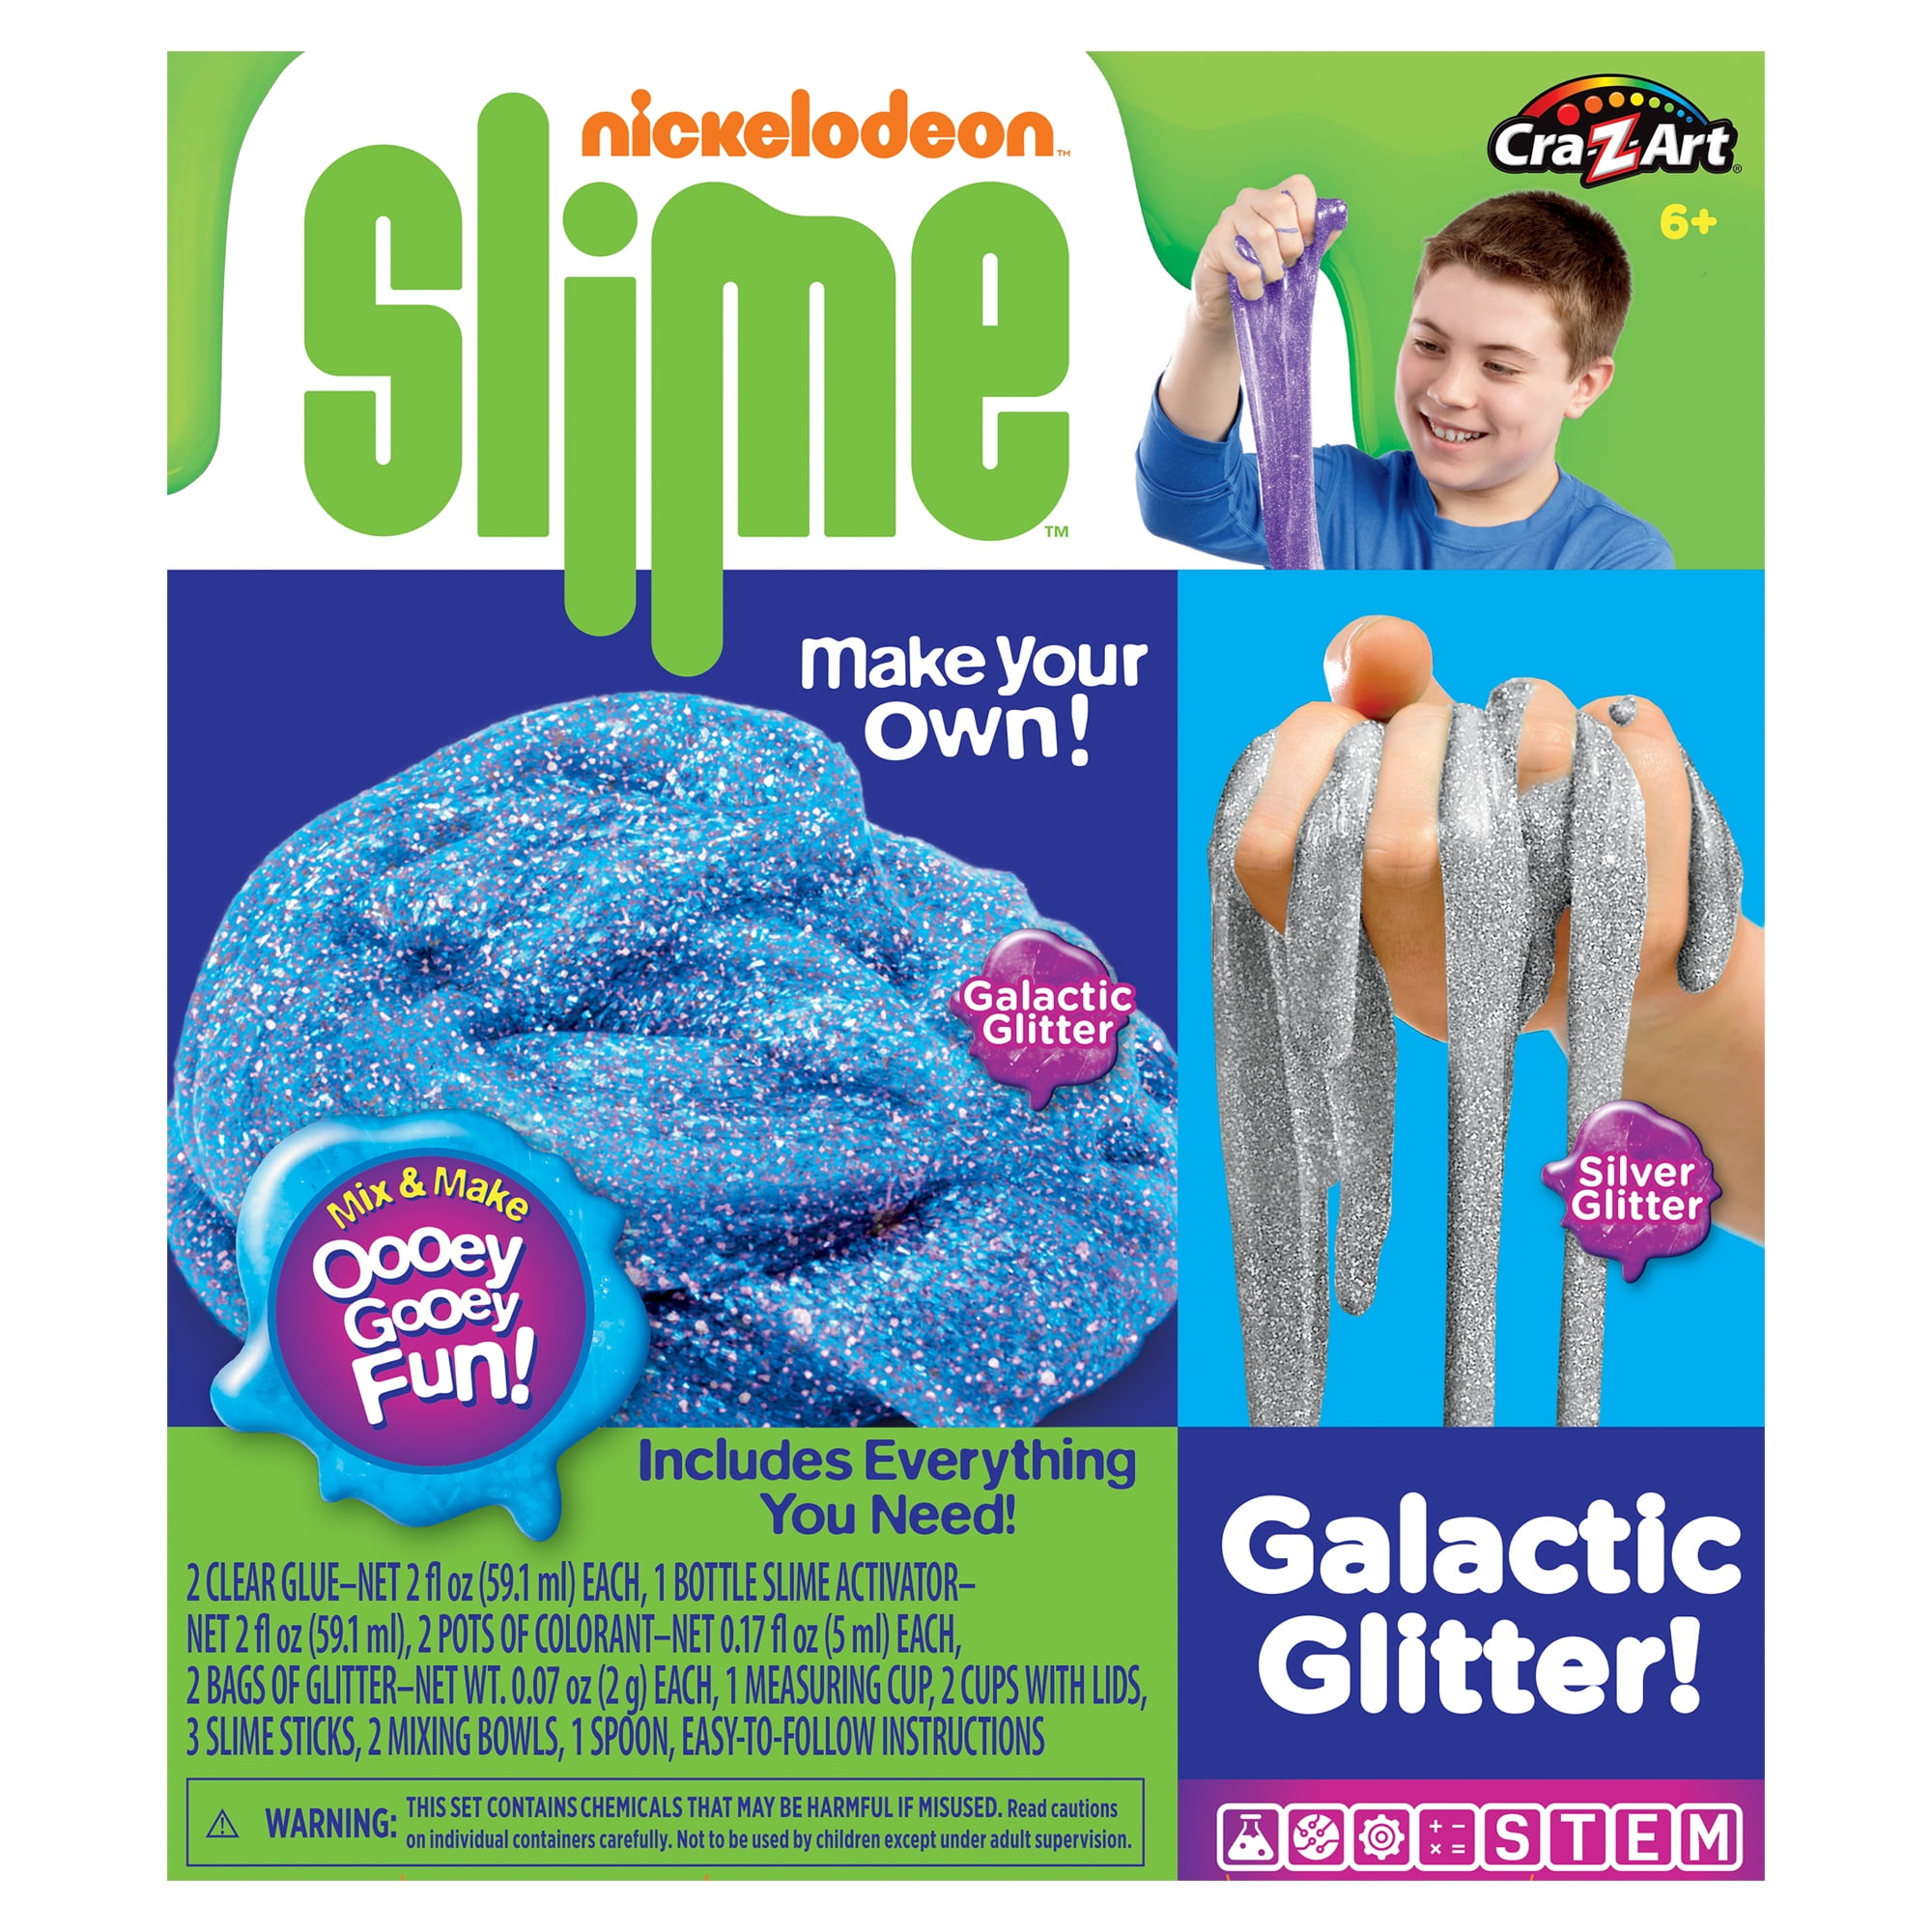 Scientific Explorer Slime Time Mix Slinky Oa952tl Alex Brands W/ Colors for sale online 